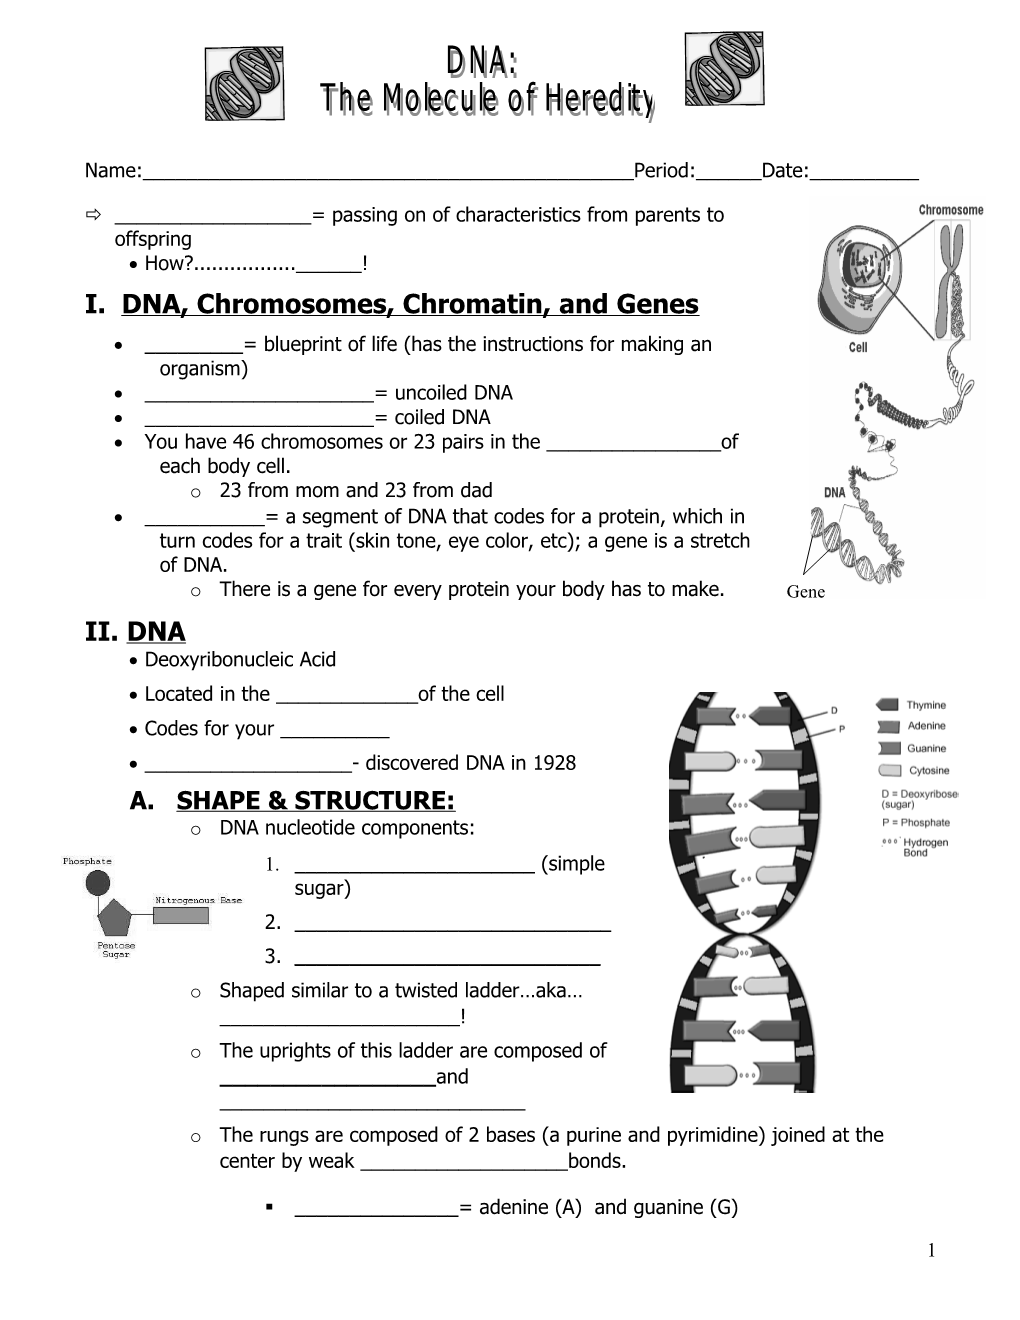 I. DNA, Chromosomes, Chromatin, and Genes